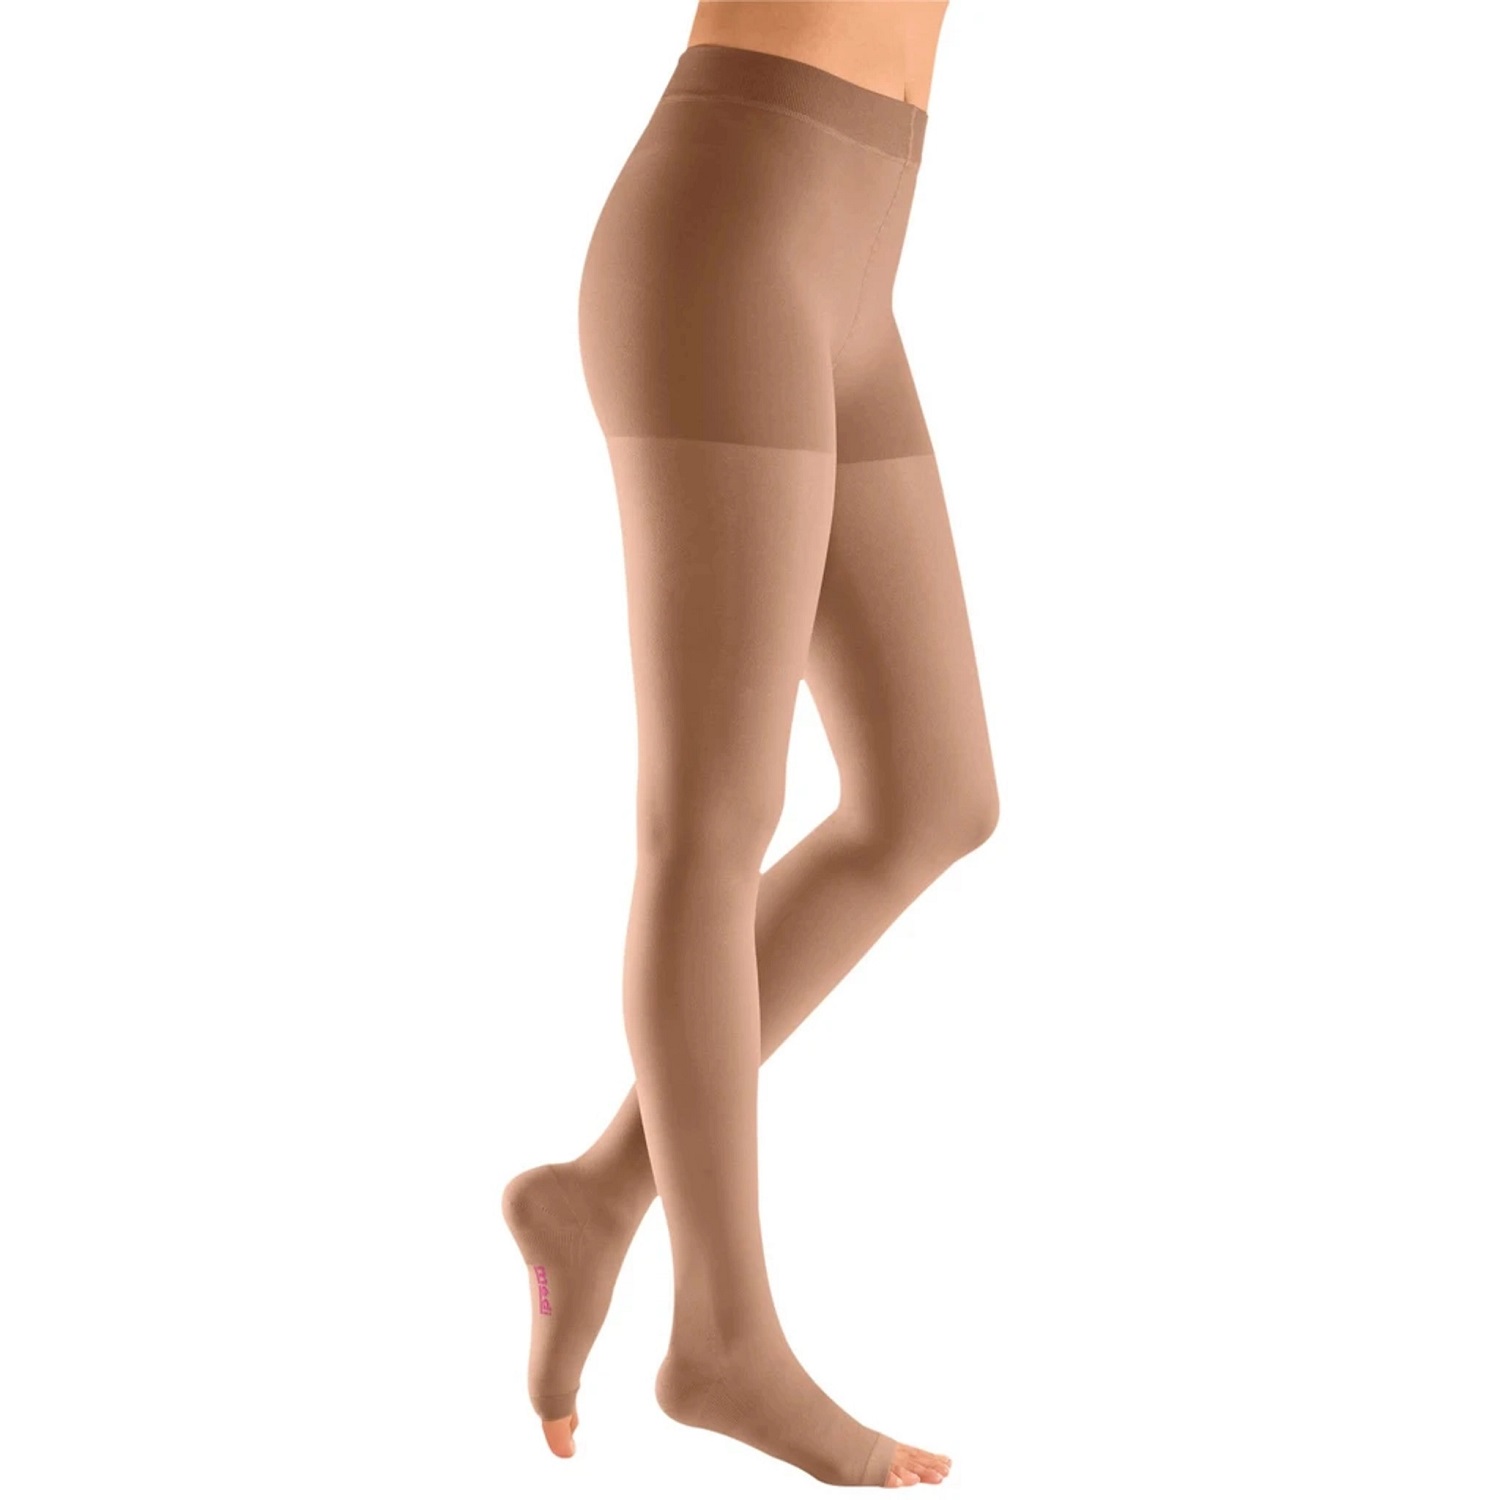 Juzo Soft Thigh High Compression Stockings 15-20 mmHg